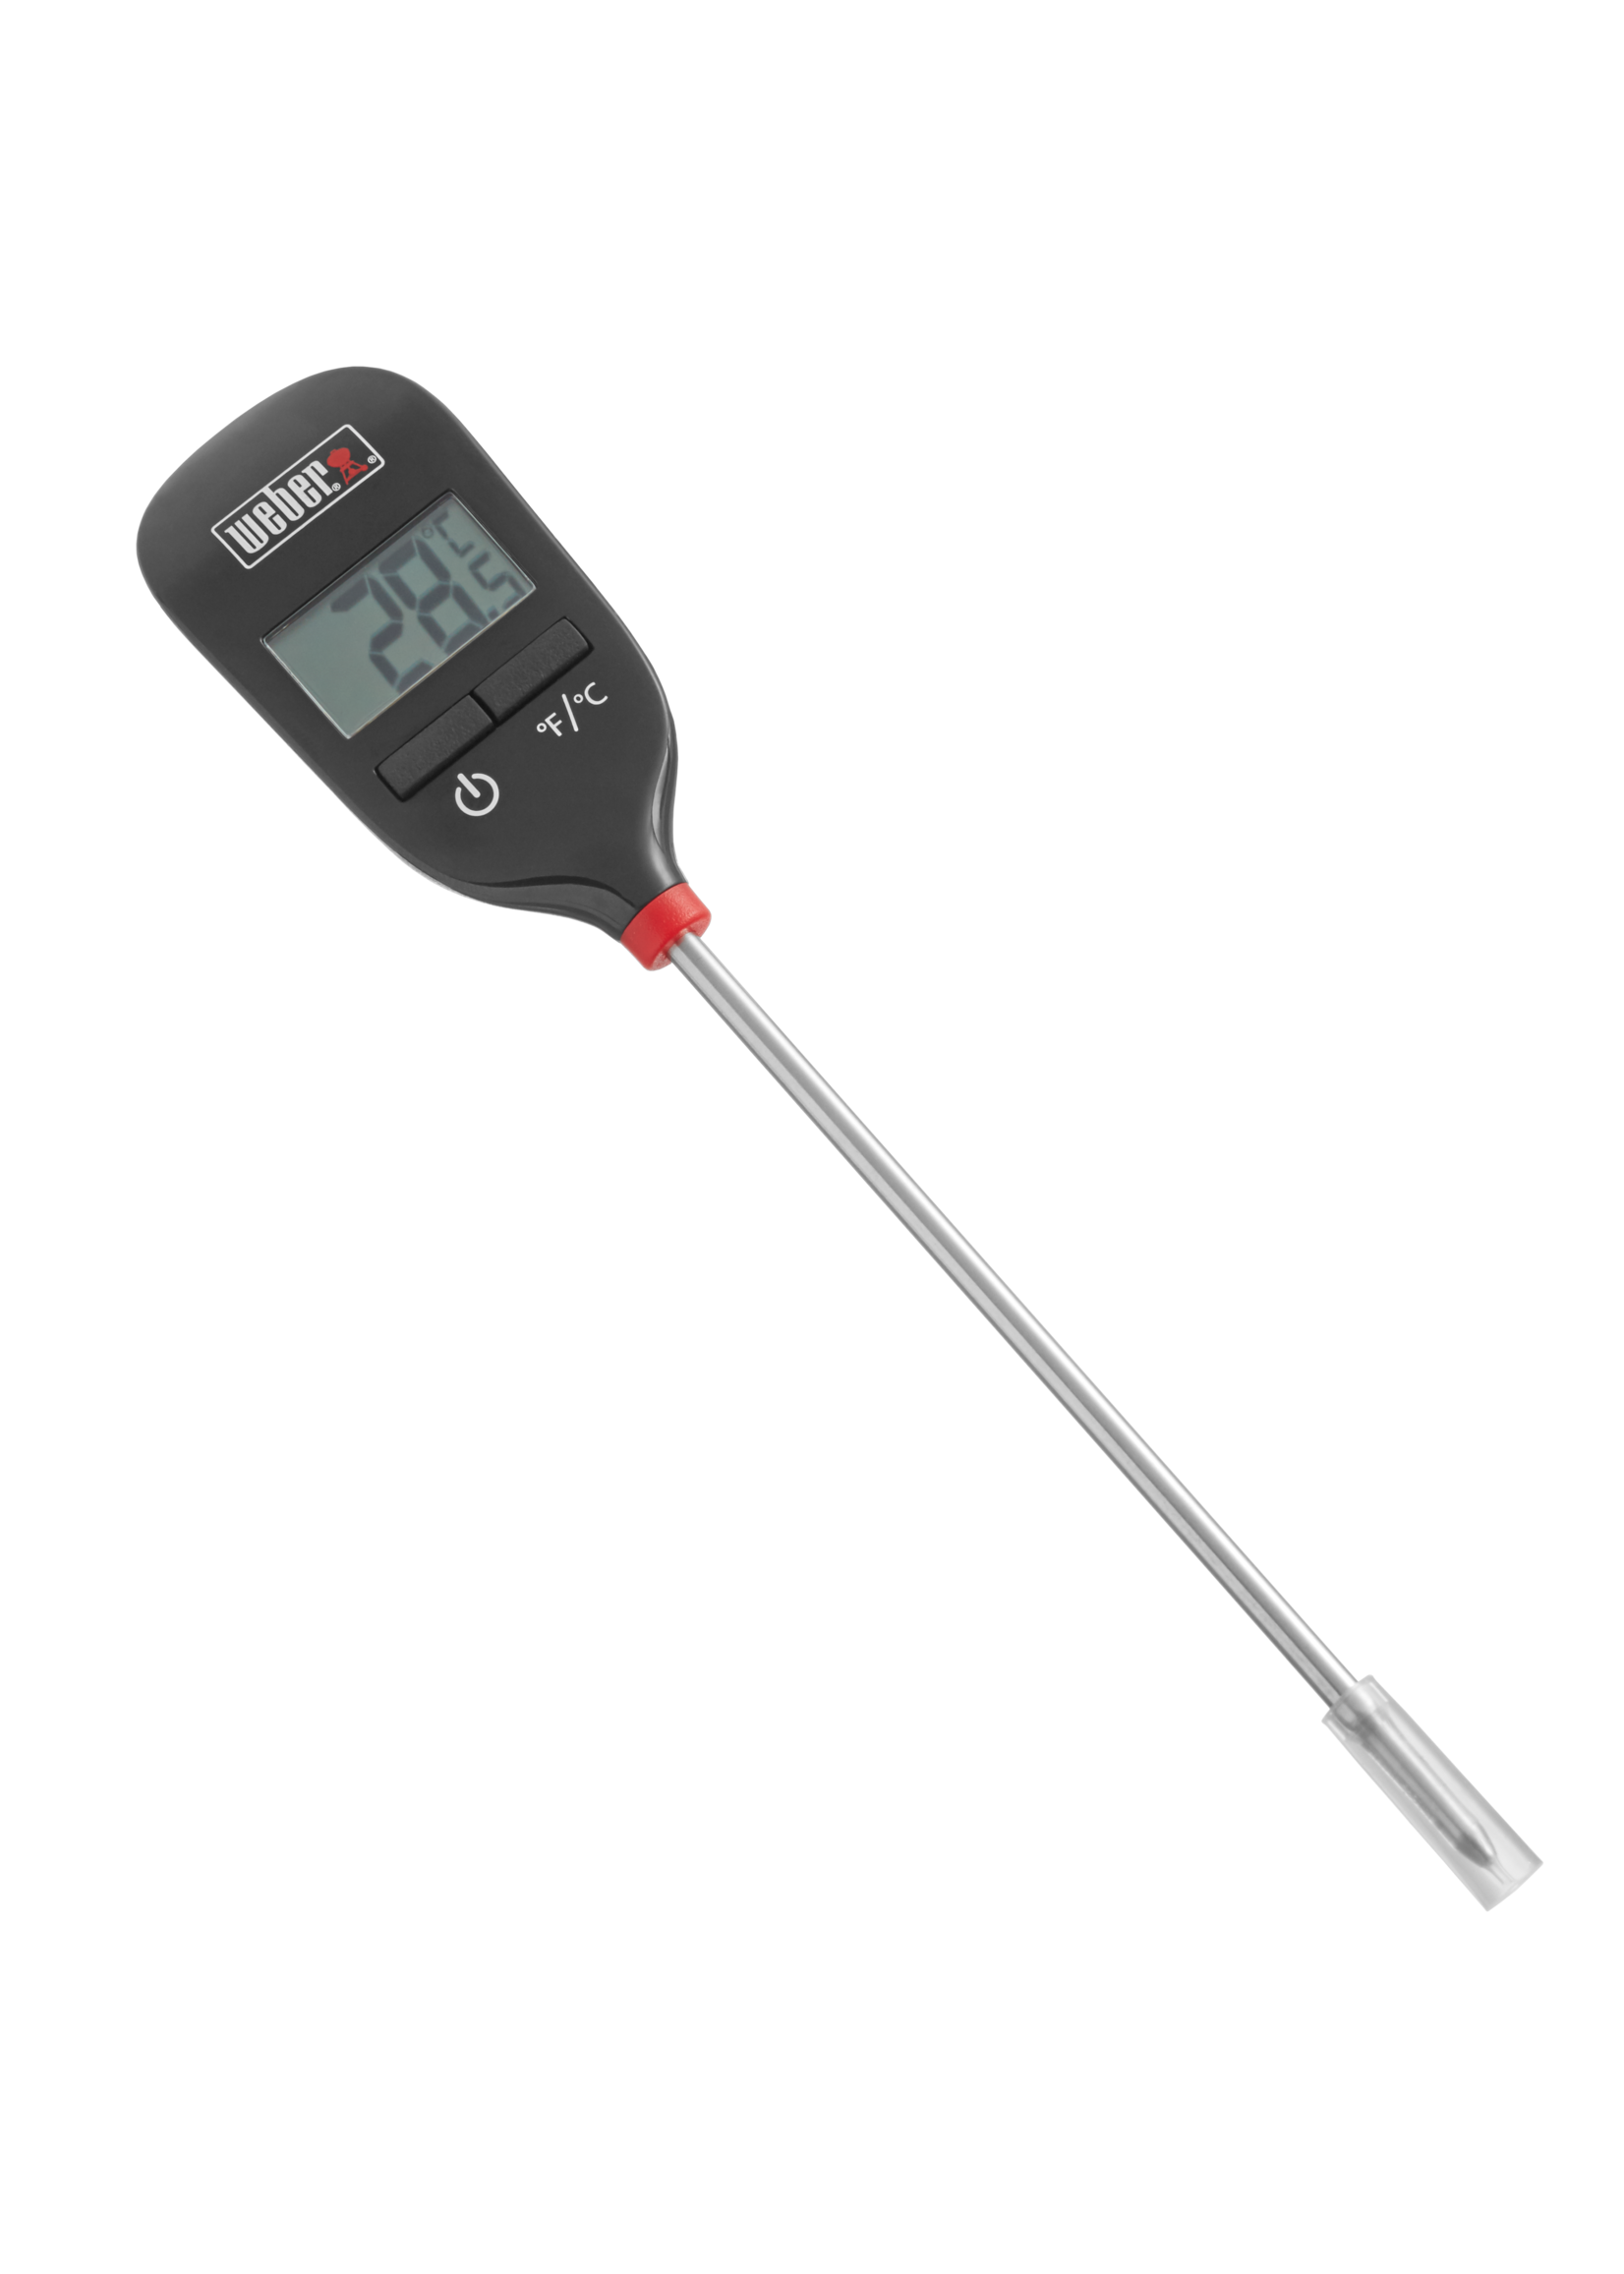 Weber Weber digitale thermometer